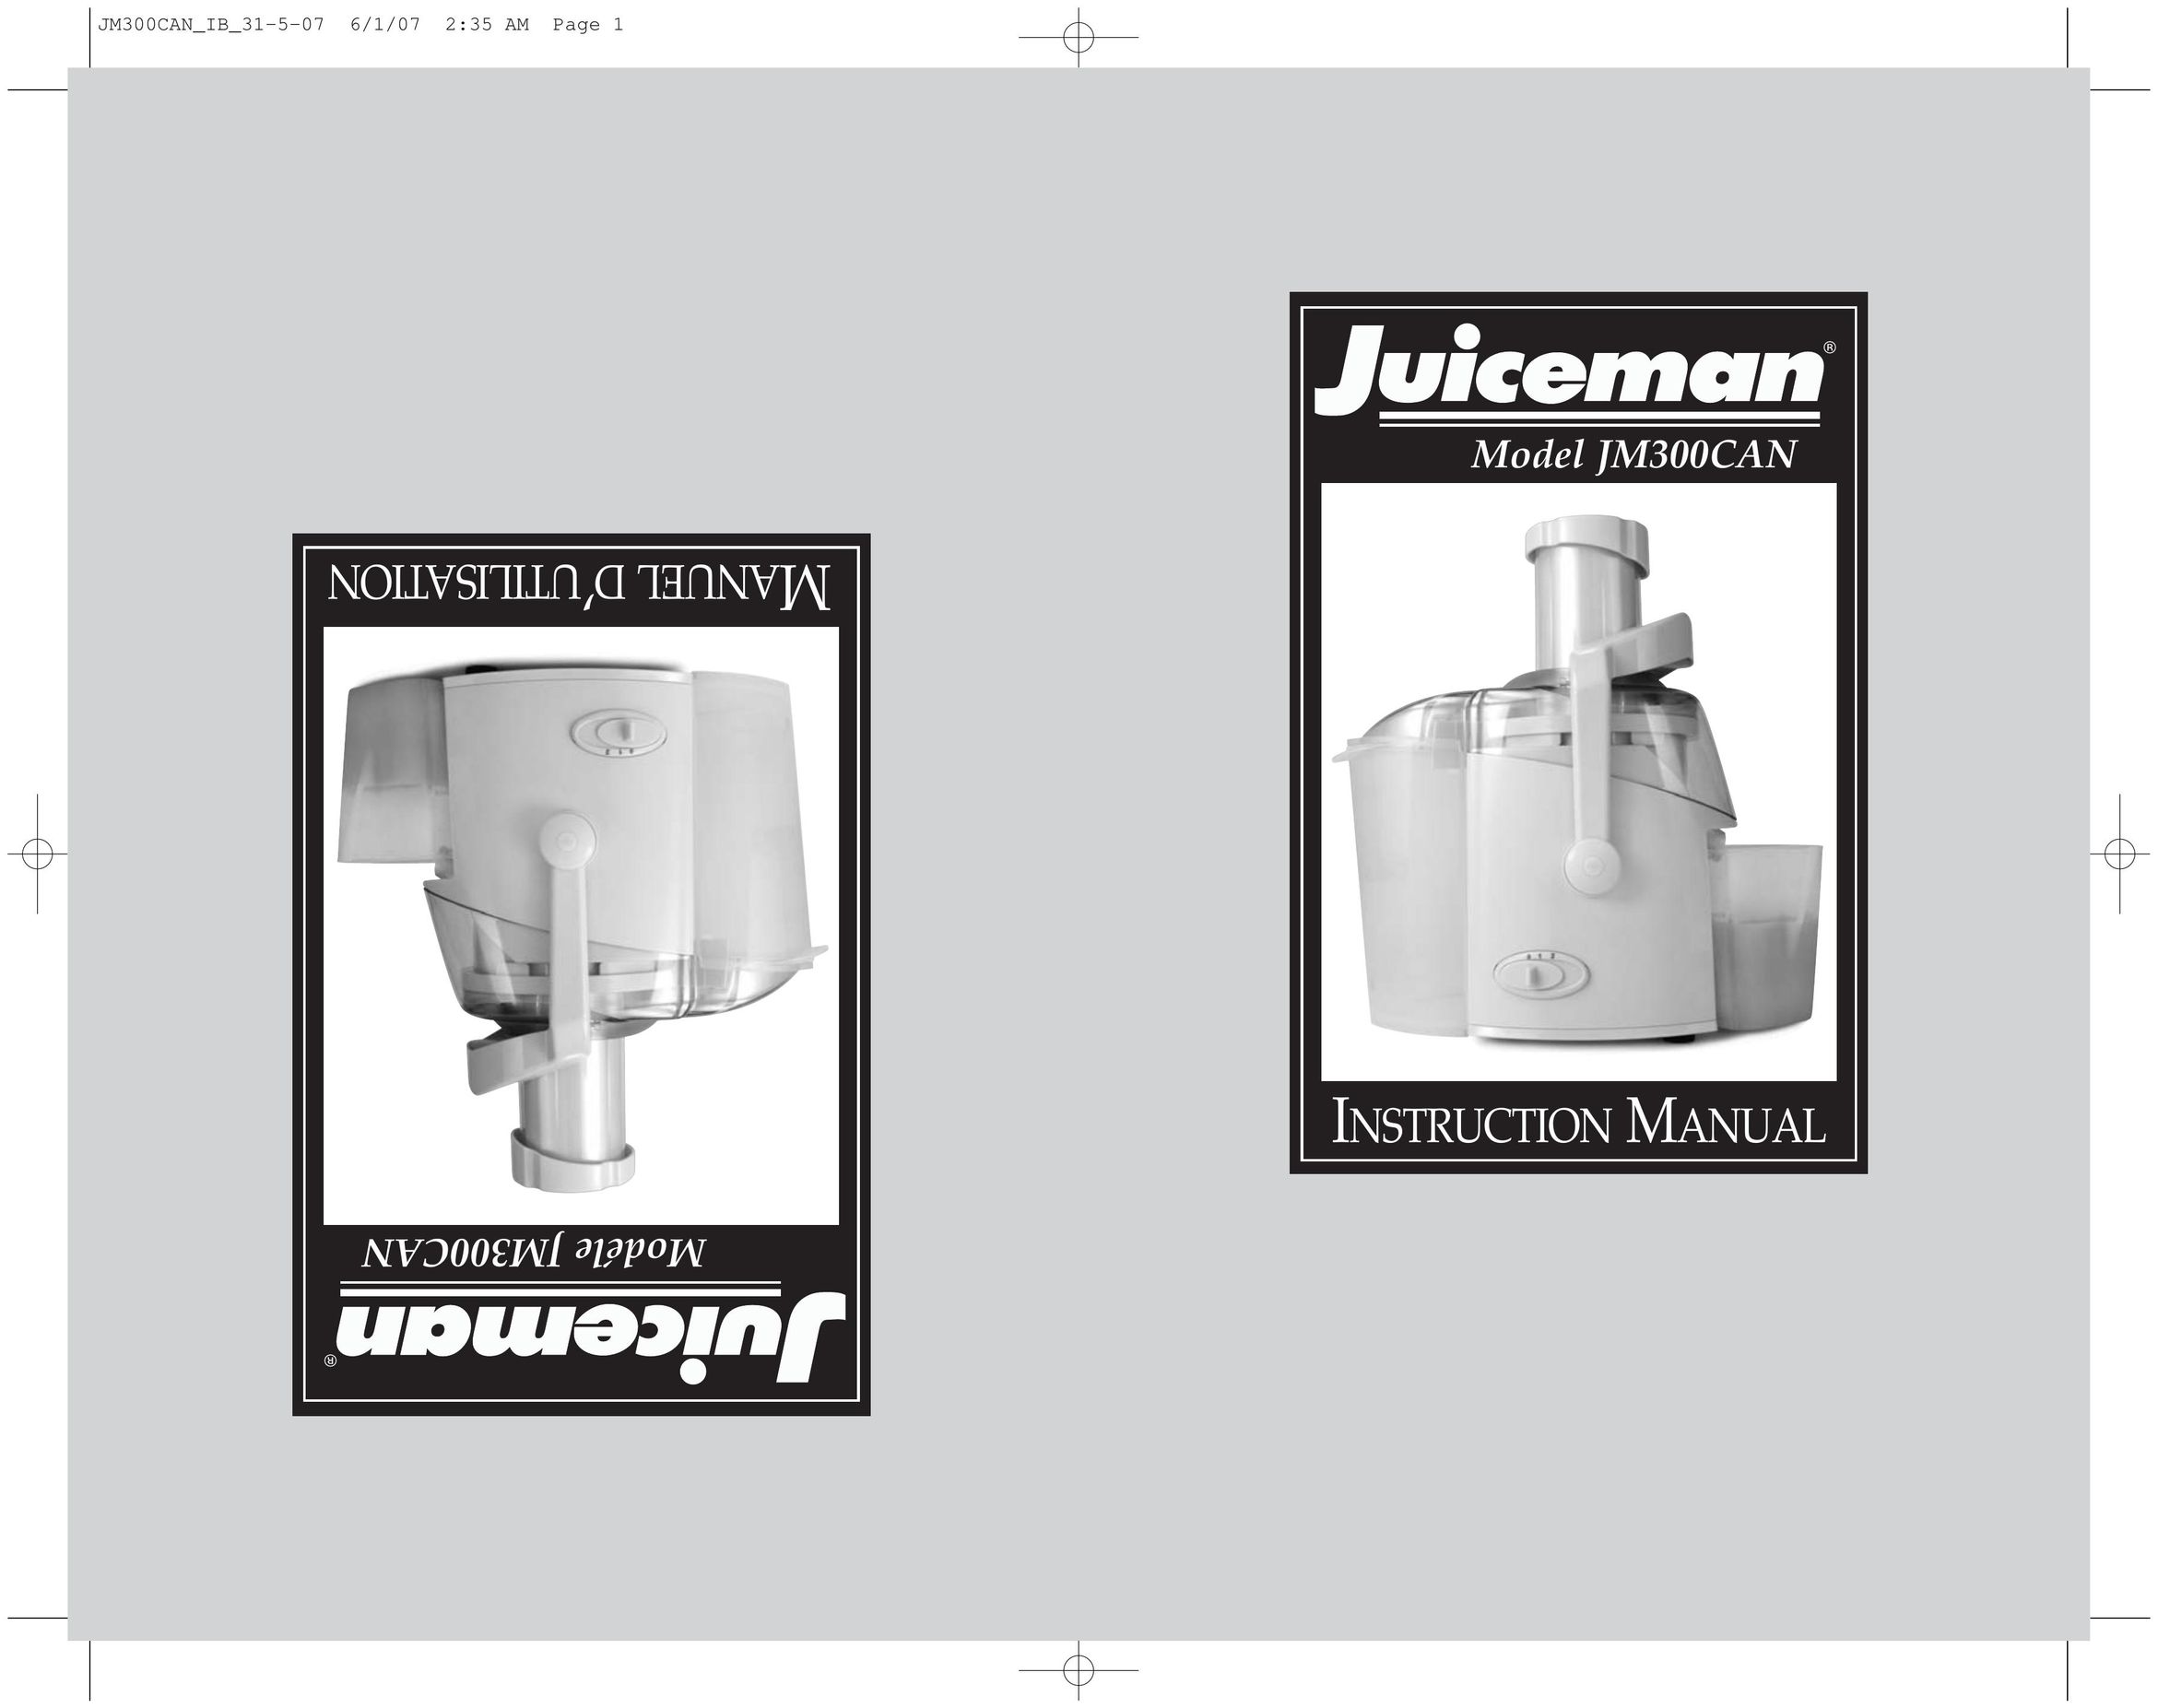 Toastmaster JM300CAN Juicer User Manual